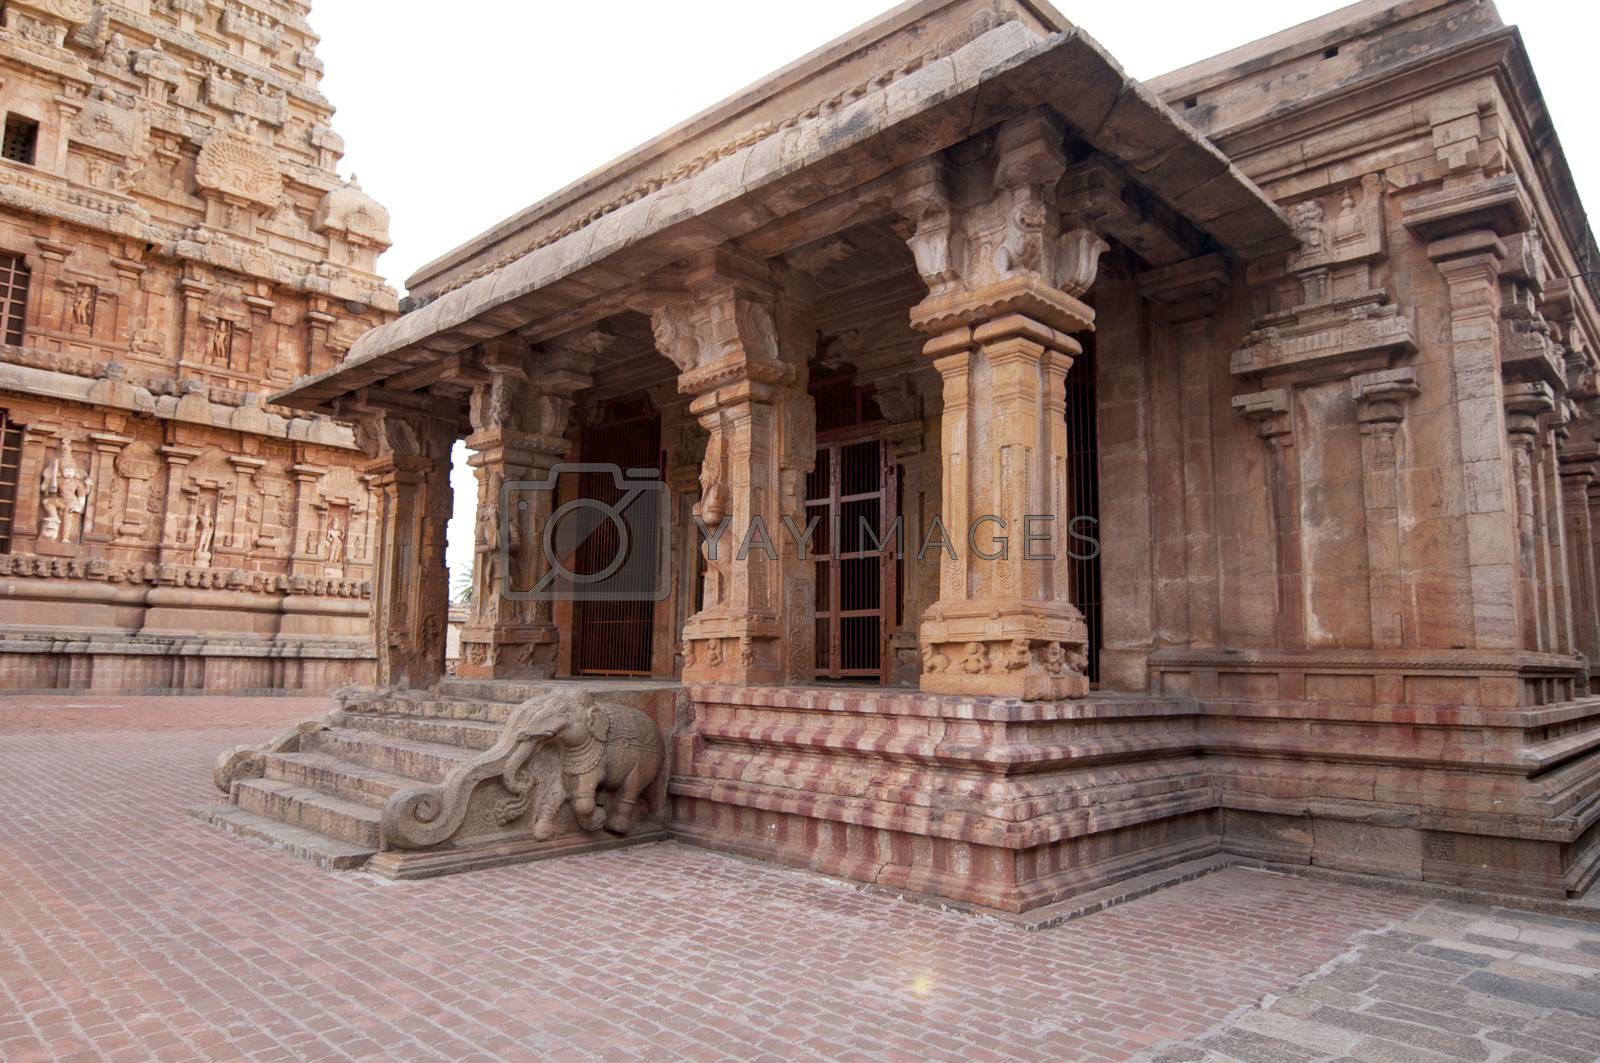 Royalty free image of Hindu Architecture by pazham